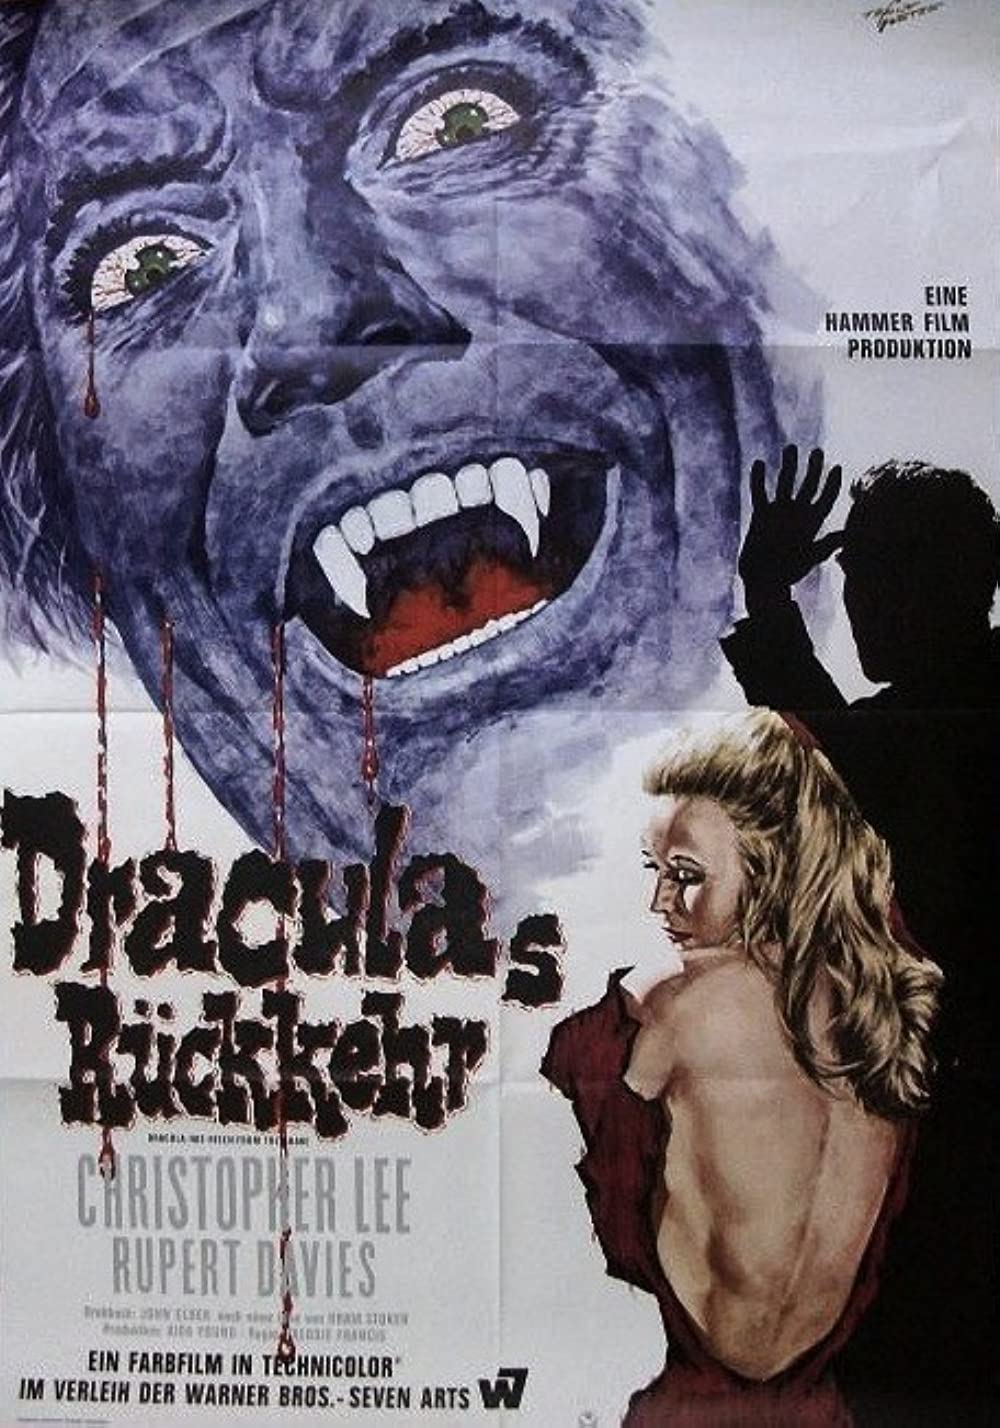 Filmbeschreibung zu Draculas Rückkehr